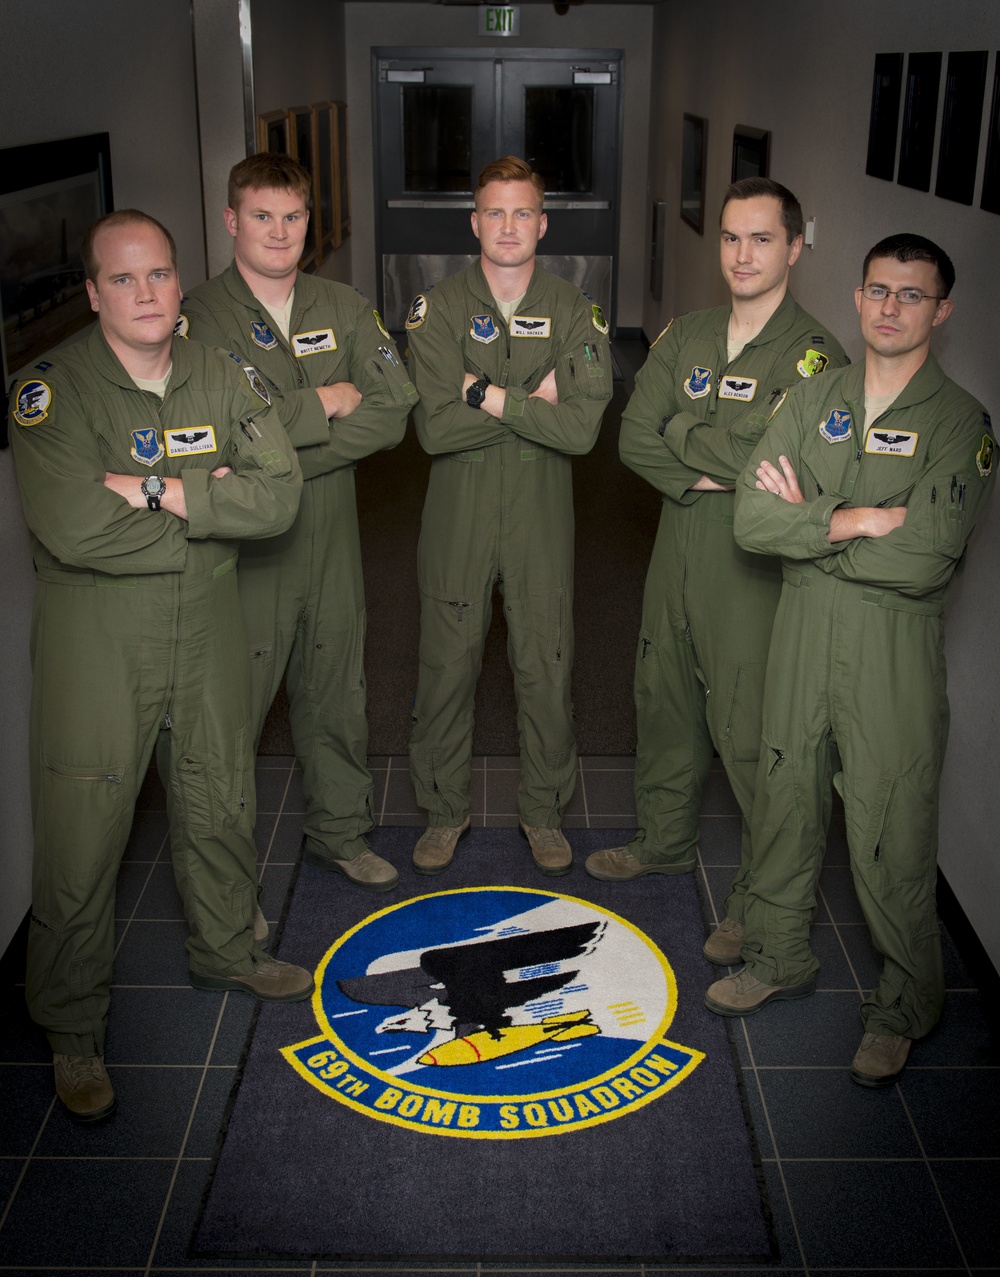 69th Bomb Squadron prepares for GSC